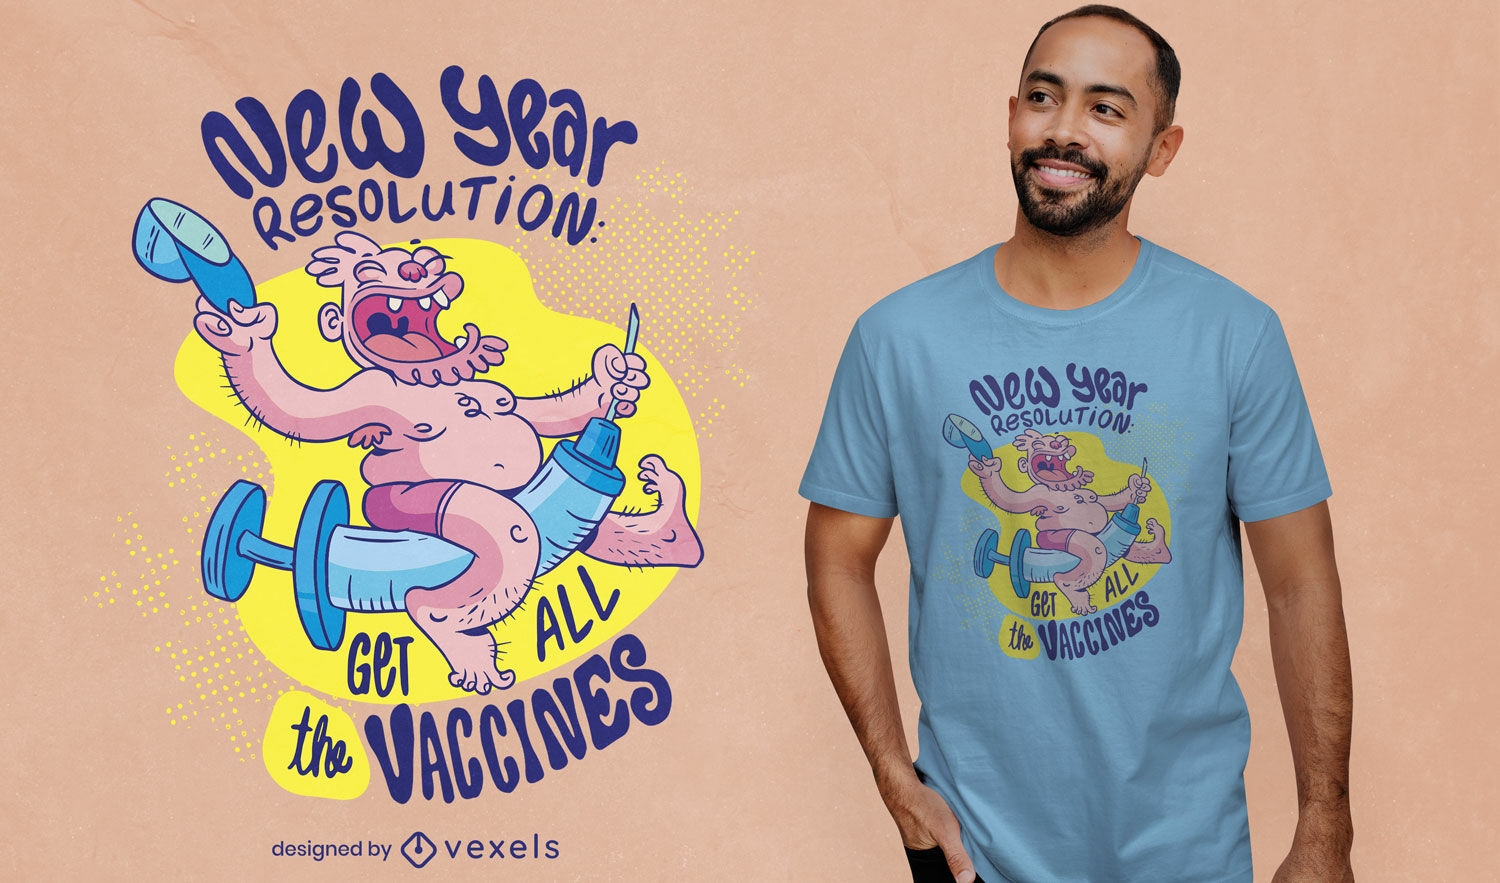 Vaccine new year resolution t-shirt design